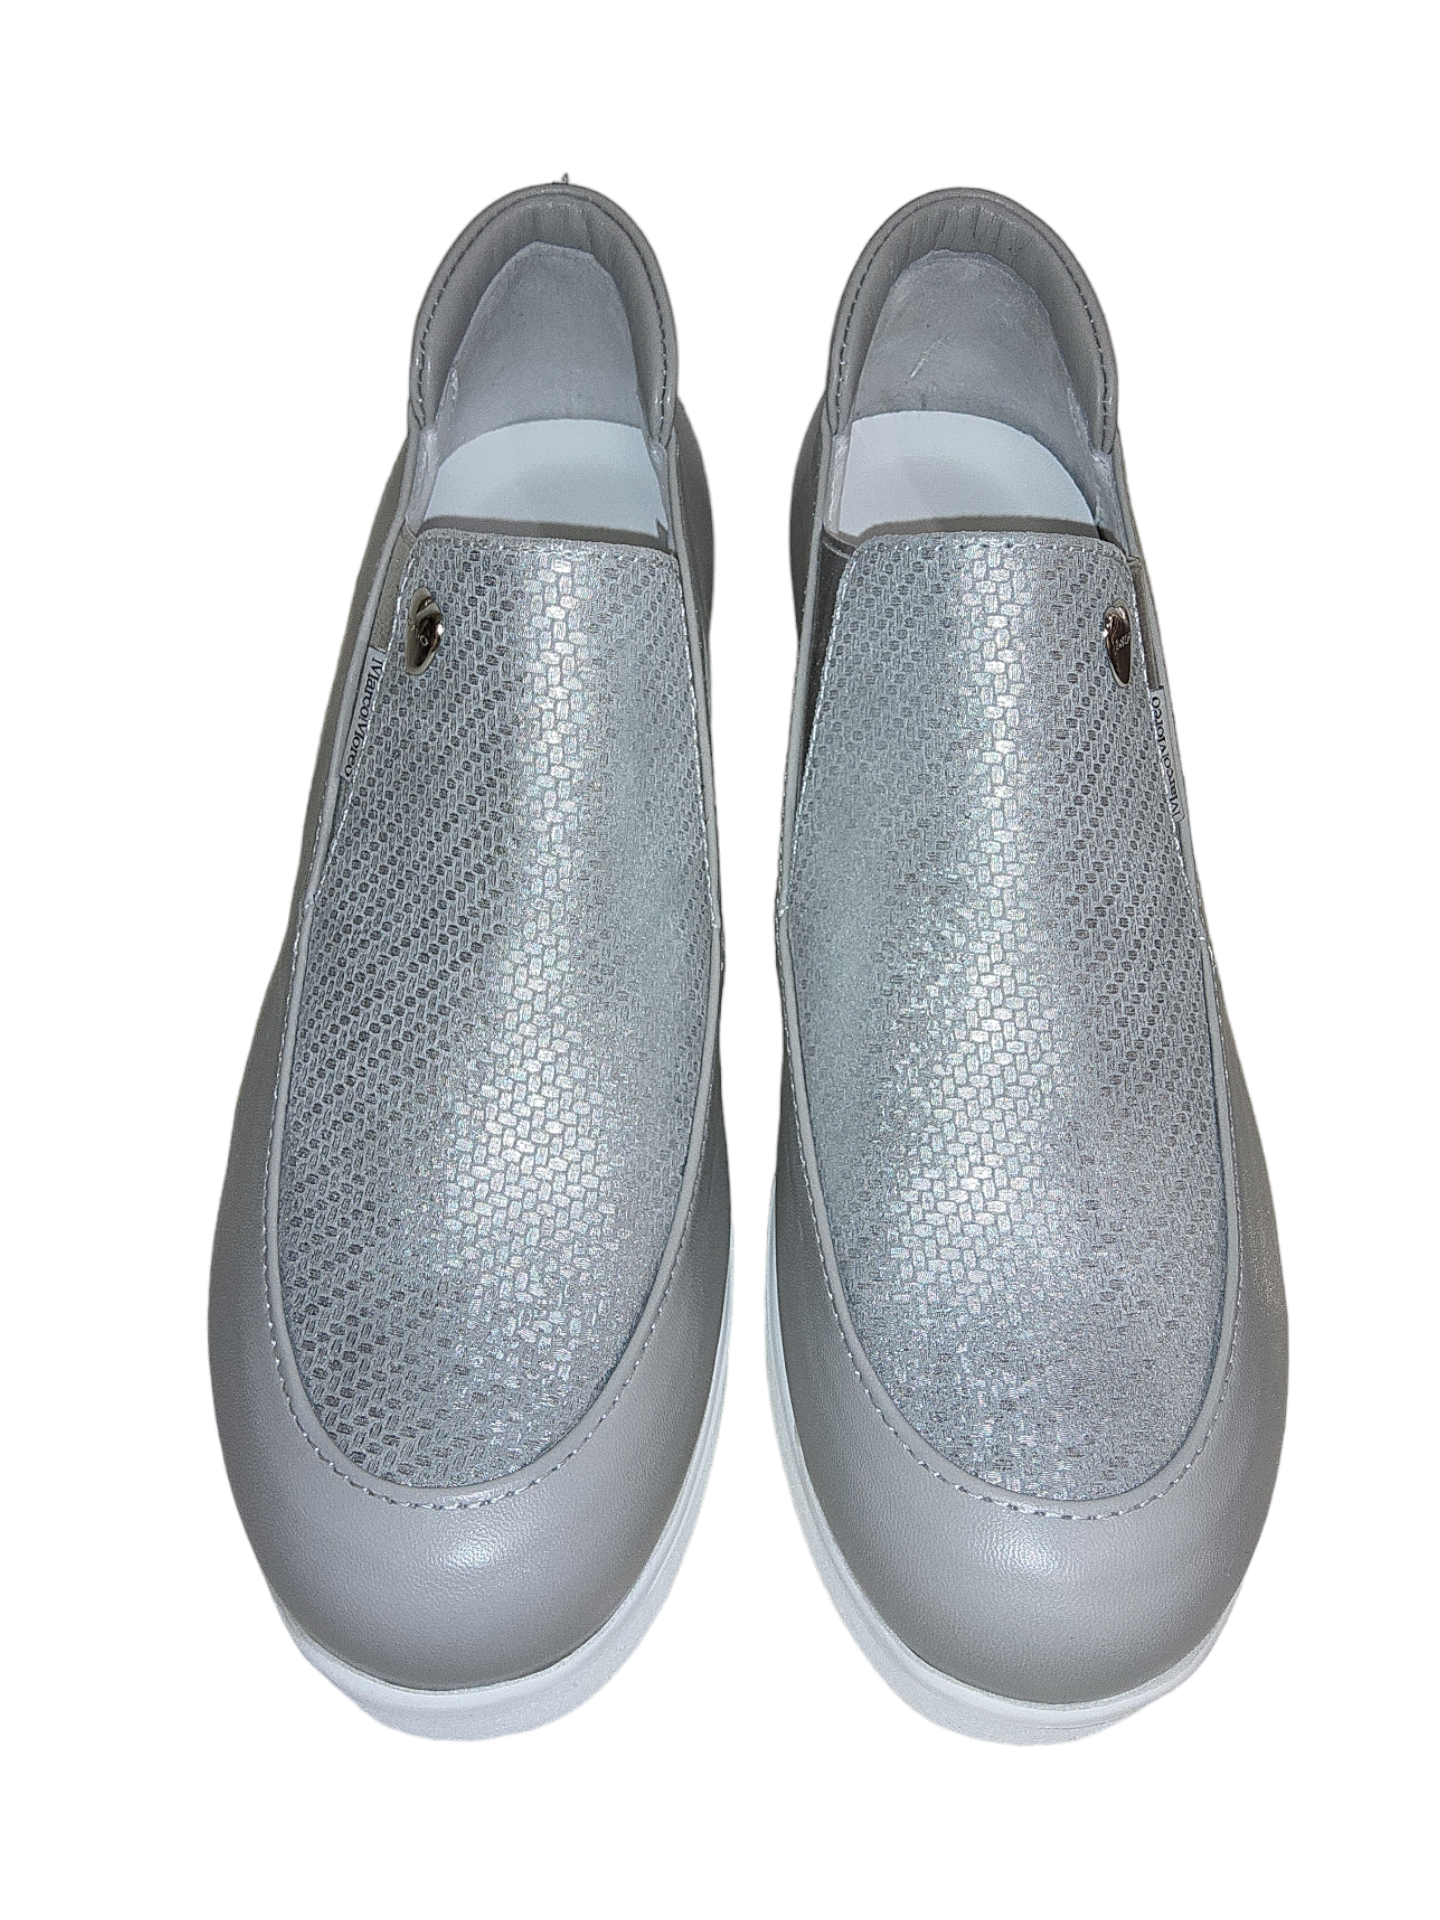 Grey leather wedge shoe